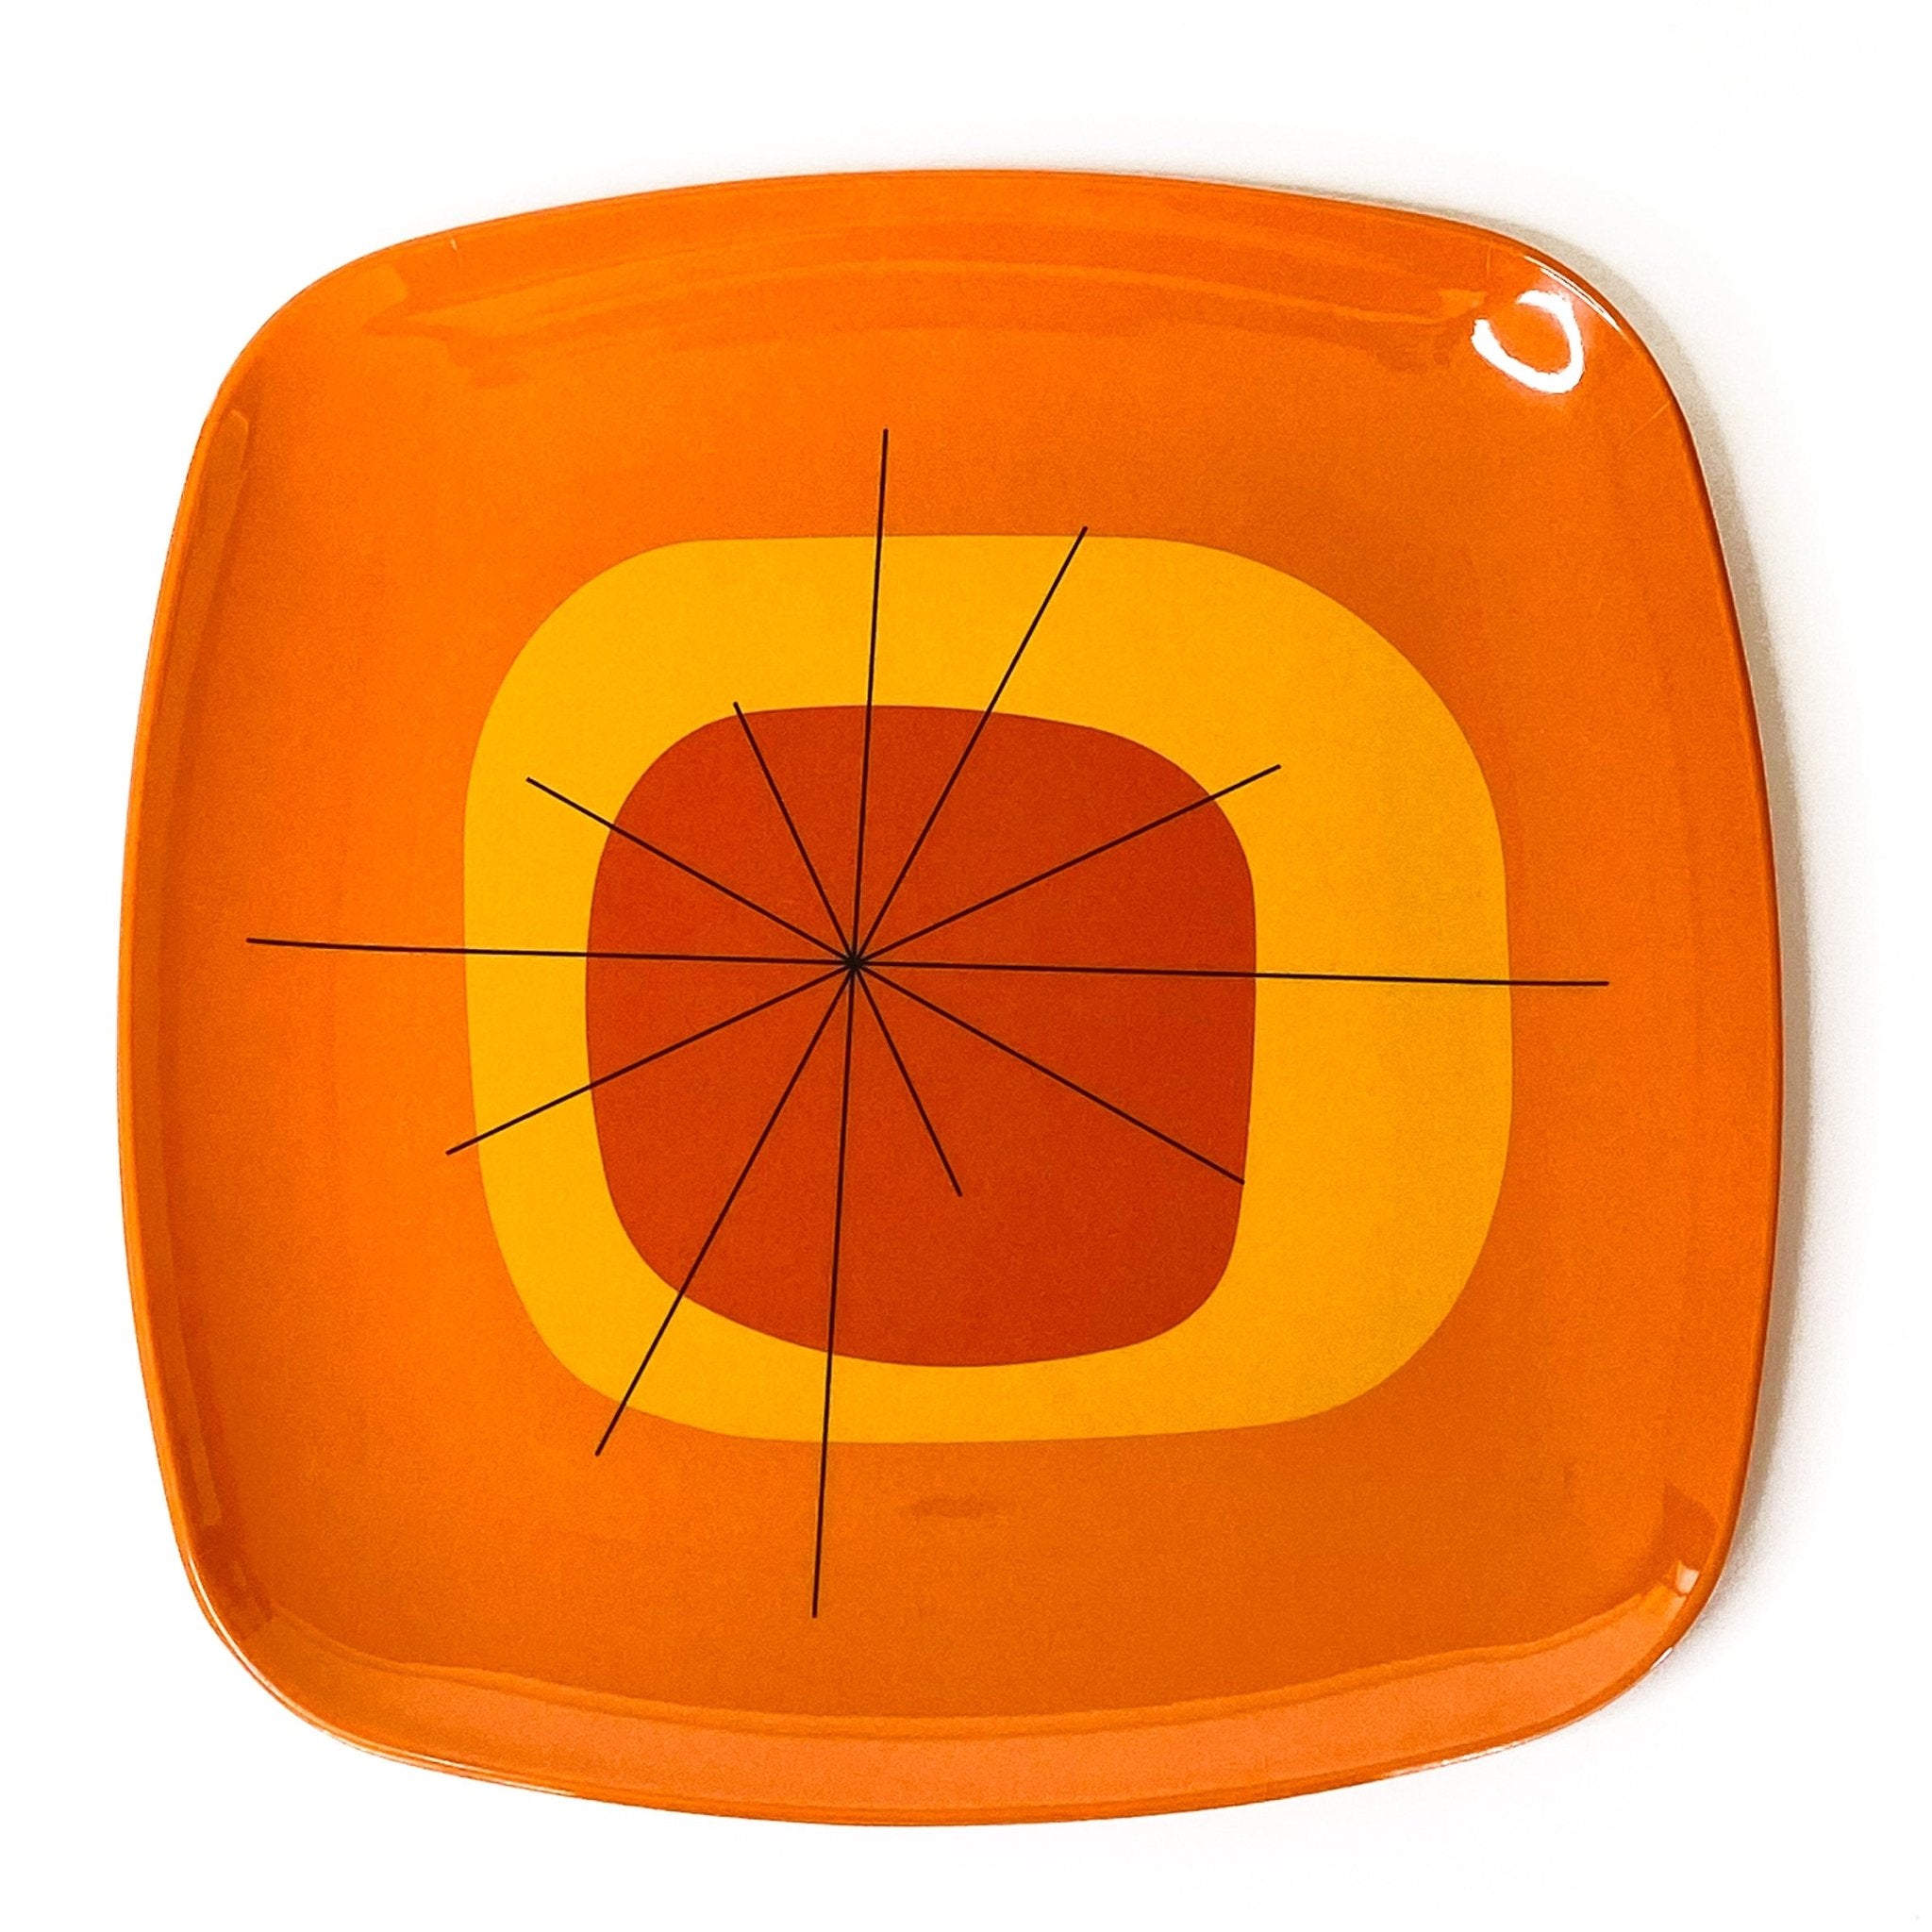 Atomic Melamine Dinner Plates - Orange - Set of 4 - Destination PSP